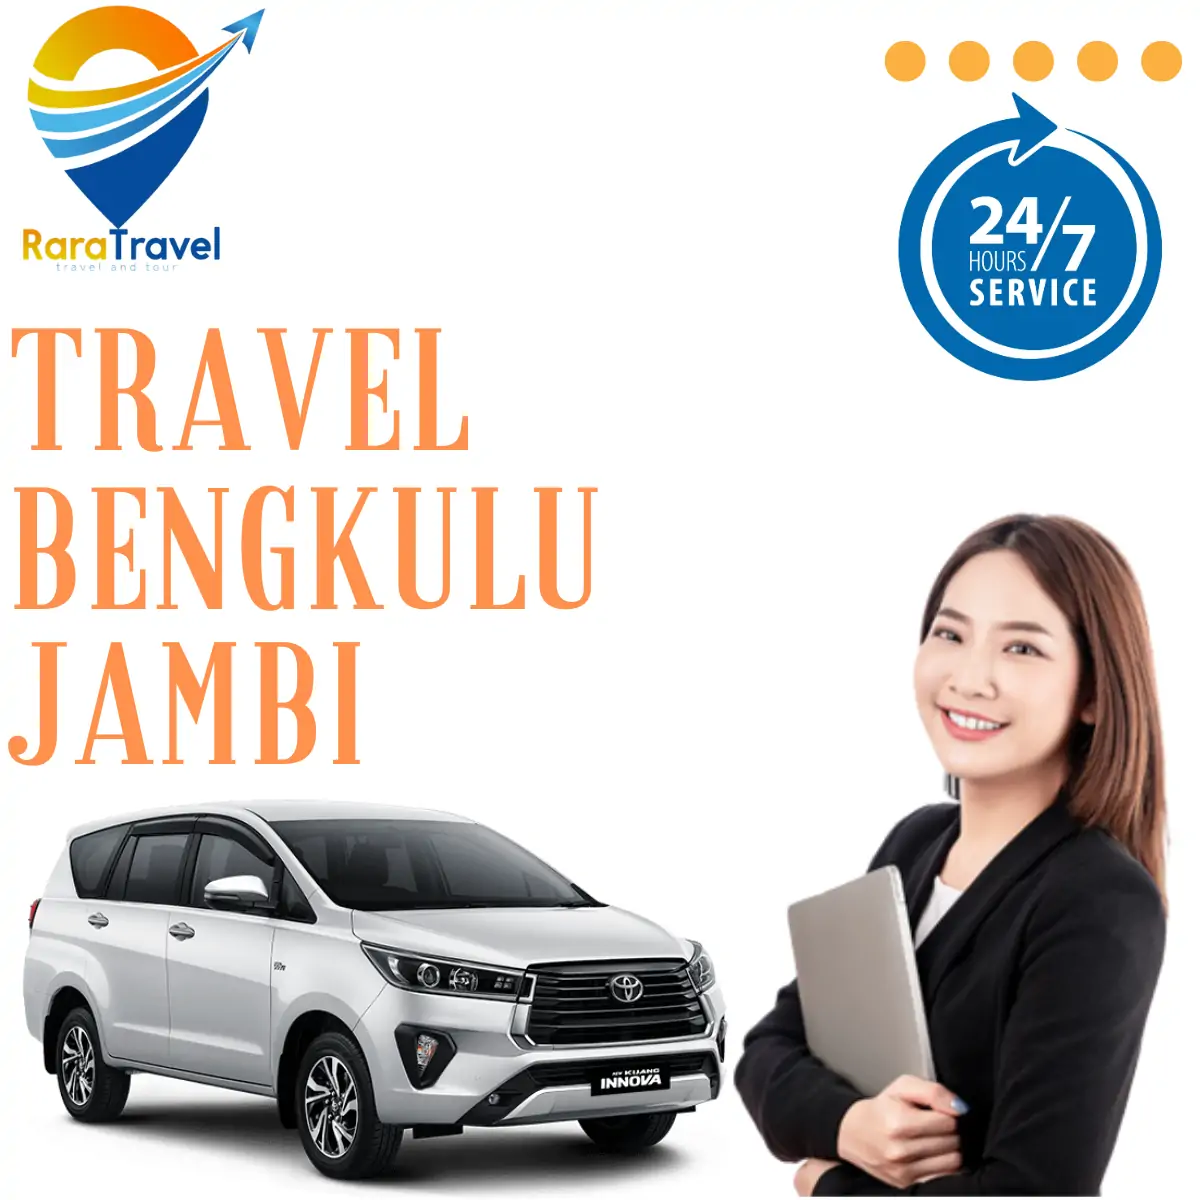 Travel Bengkulu Jambi Hiace, Harga Tiket Murah, Layanan 24 Jam